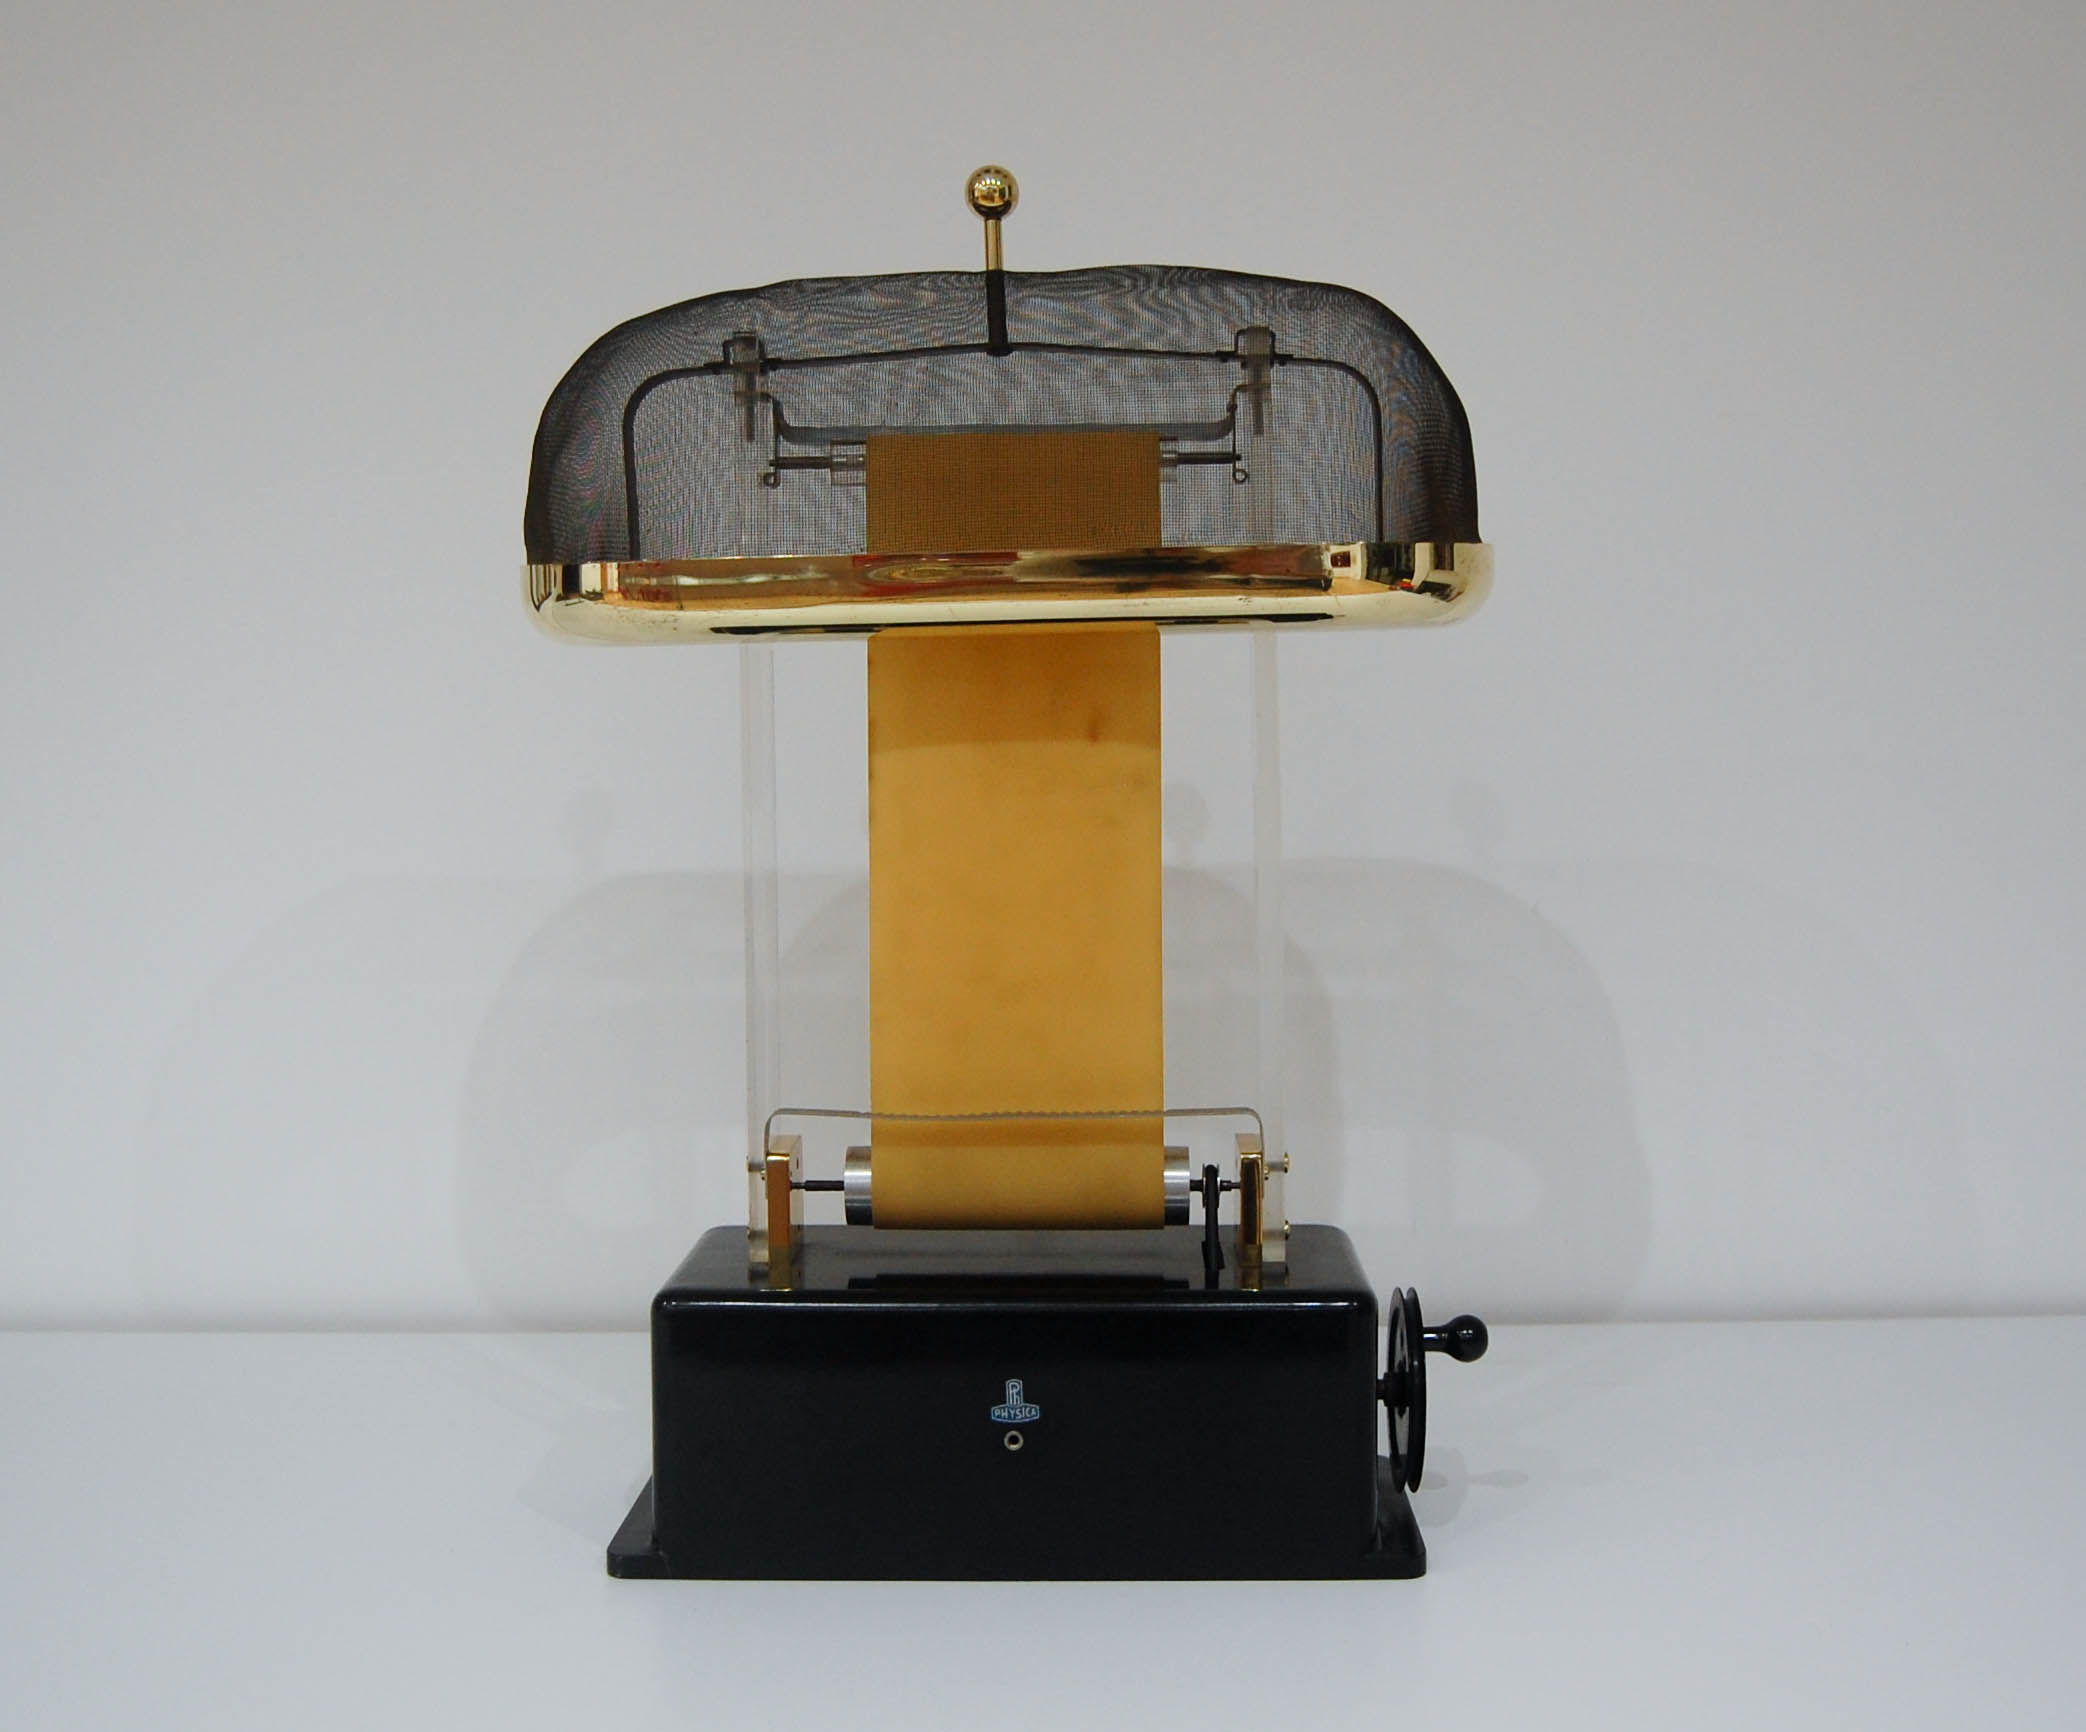 Early Demonstration Van Der Graaff Generator by Physica